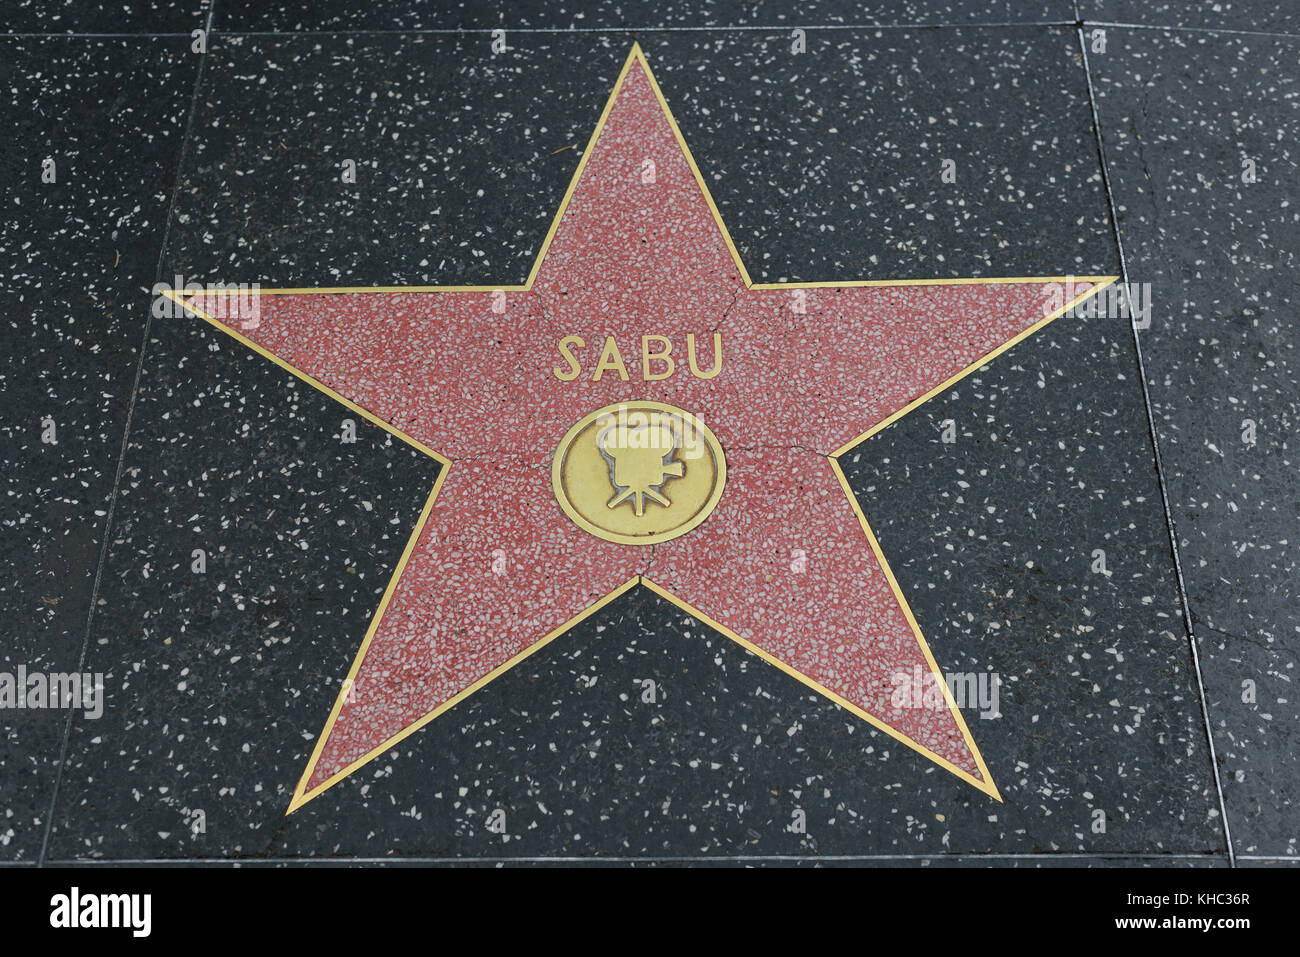 HOLLYWOOD, CA - DICEMBRE 06: Sabu star sulla Hollywood Walk of Fame a Hollywood, California il 6 dicembre 2016. Foto Stock